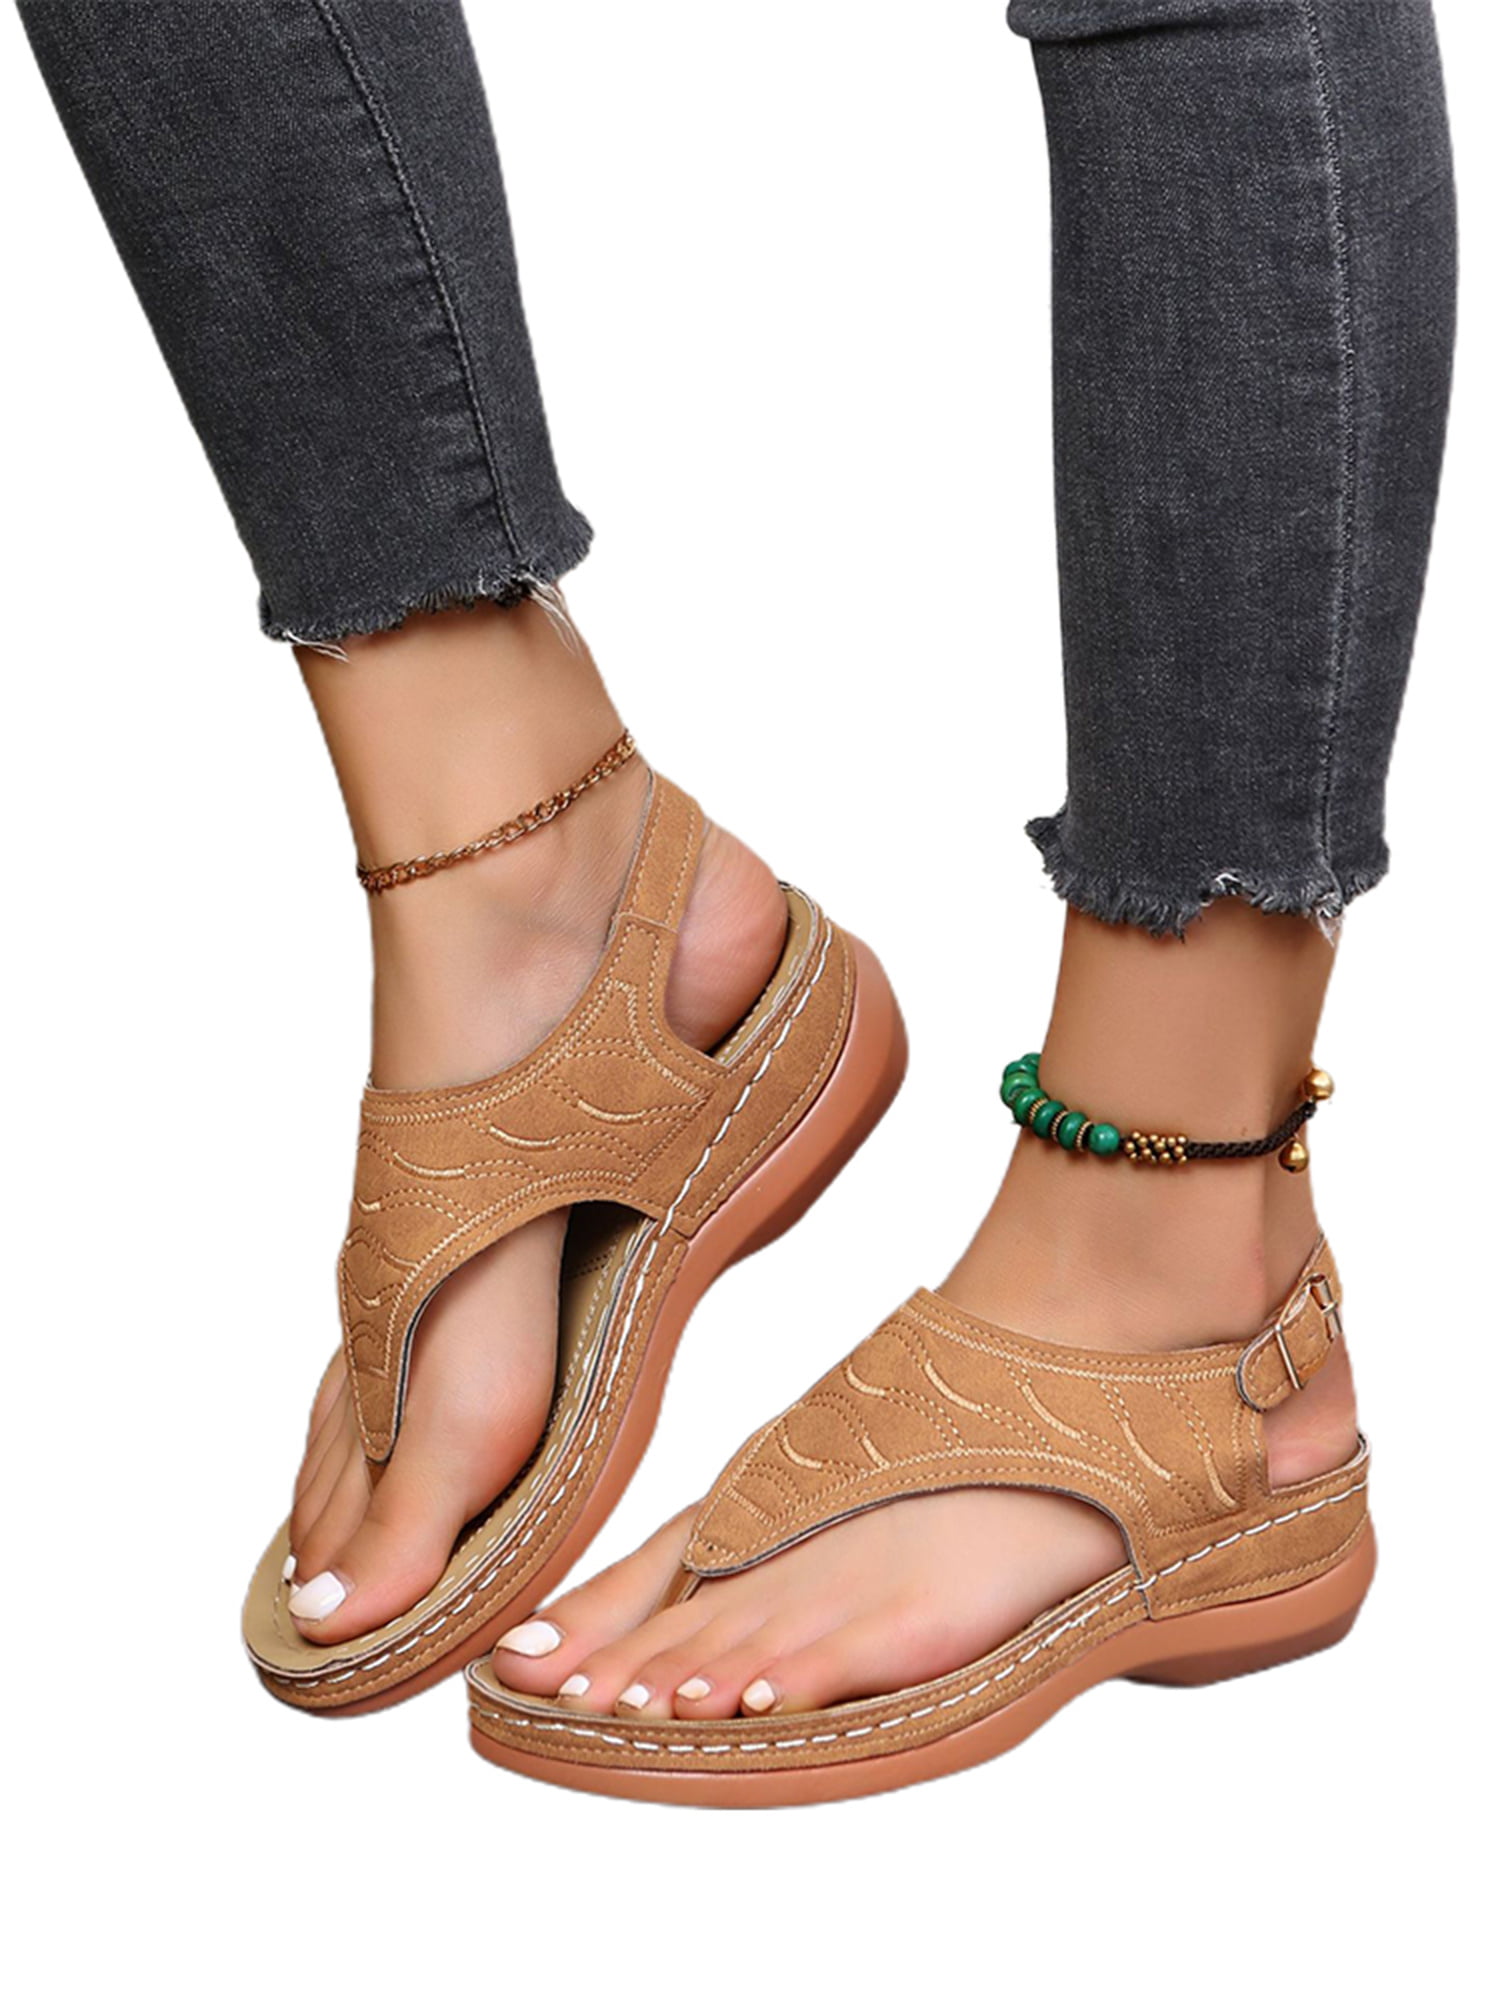 Details about   Roman Women's Shoes Summer Wedges Platform Sandals Casual Non-Slip Flat Loafers 